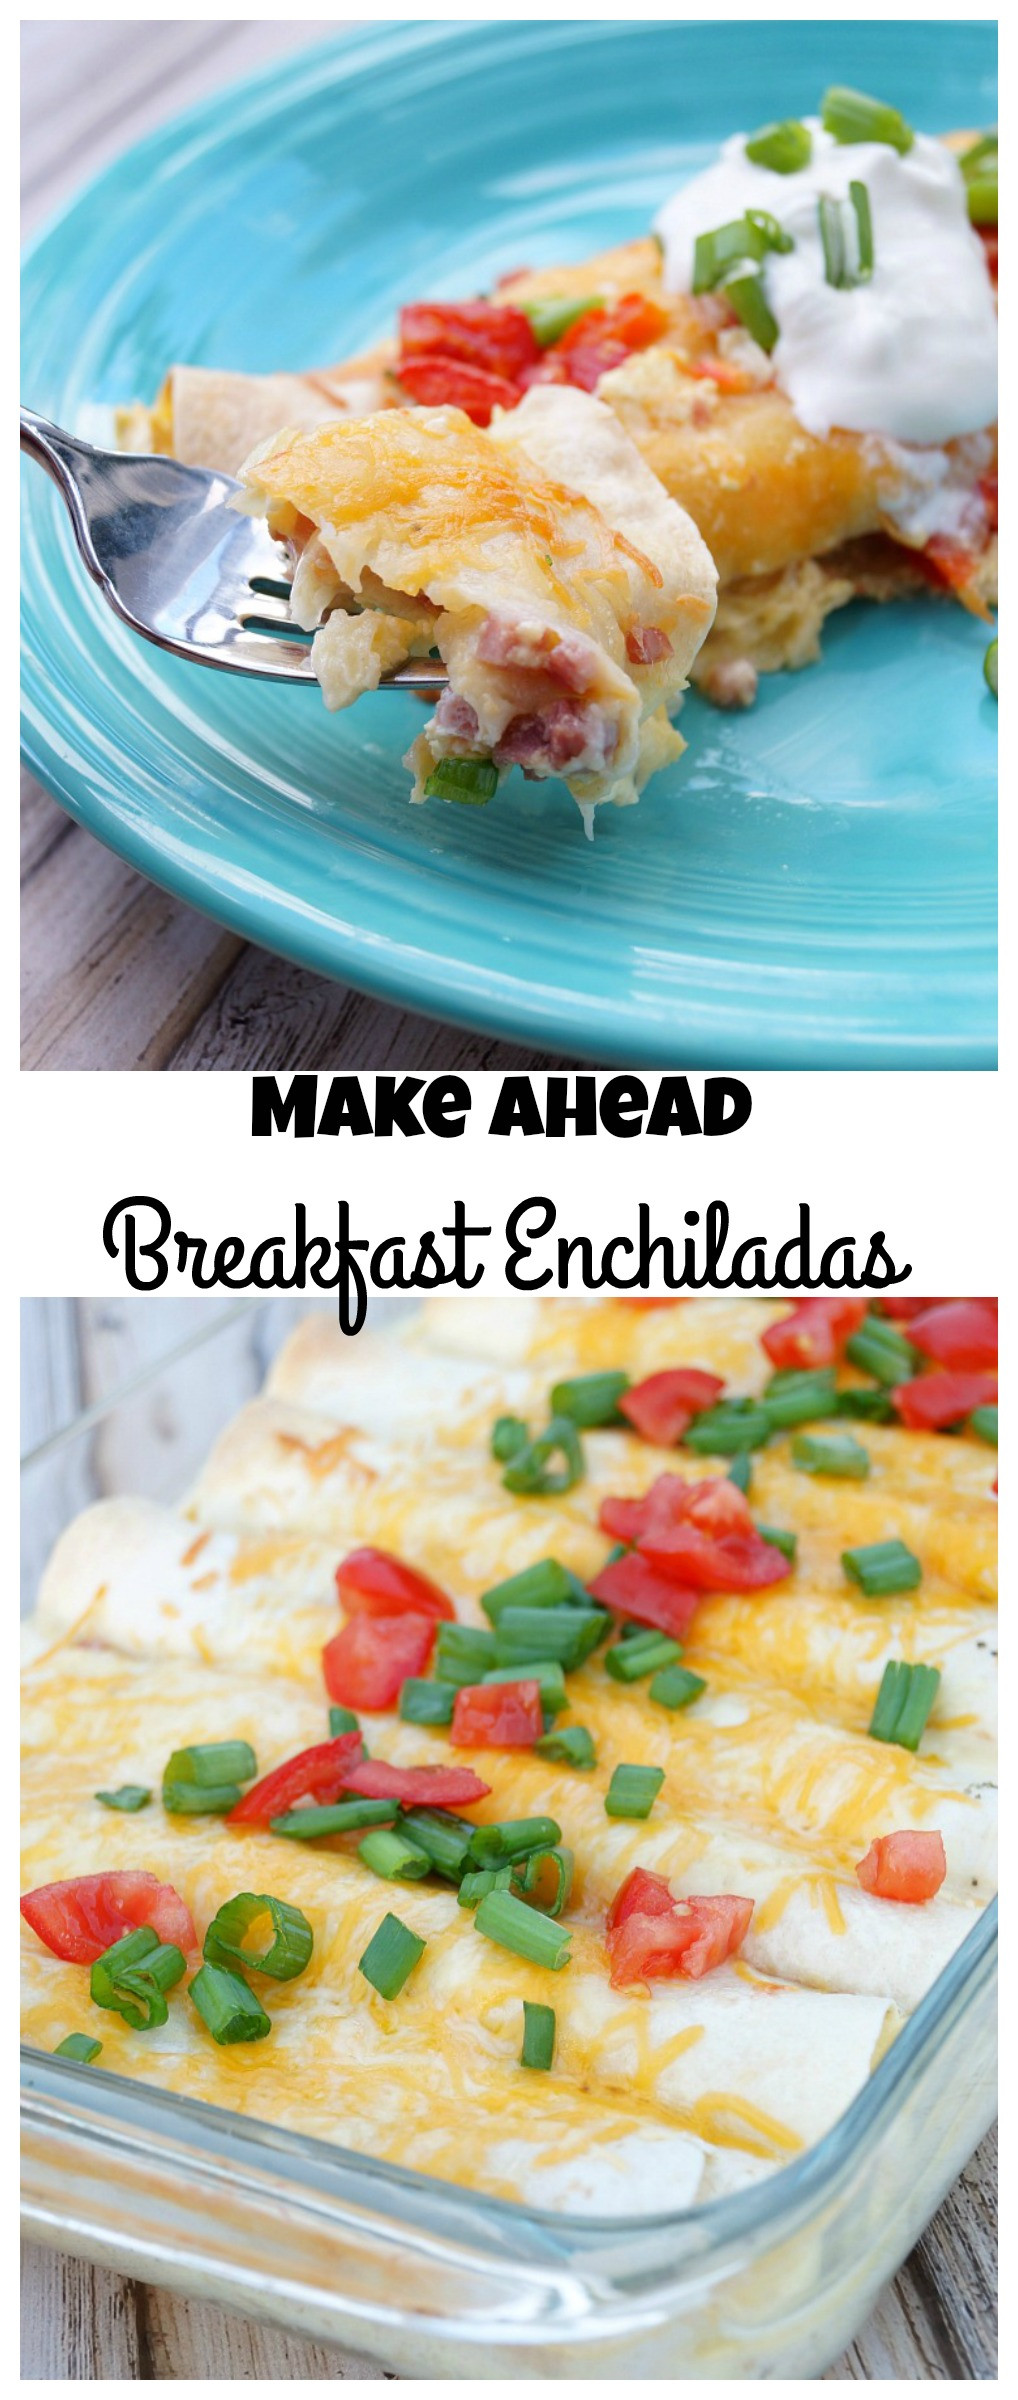 Make Ahead Breakfast Enchiladas
 Make Ahead Breakfast Enchiladas